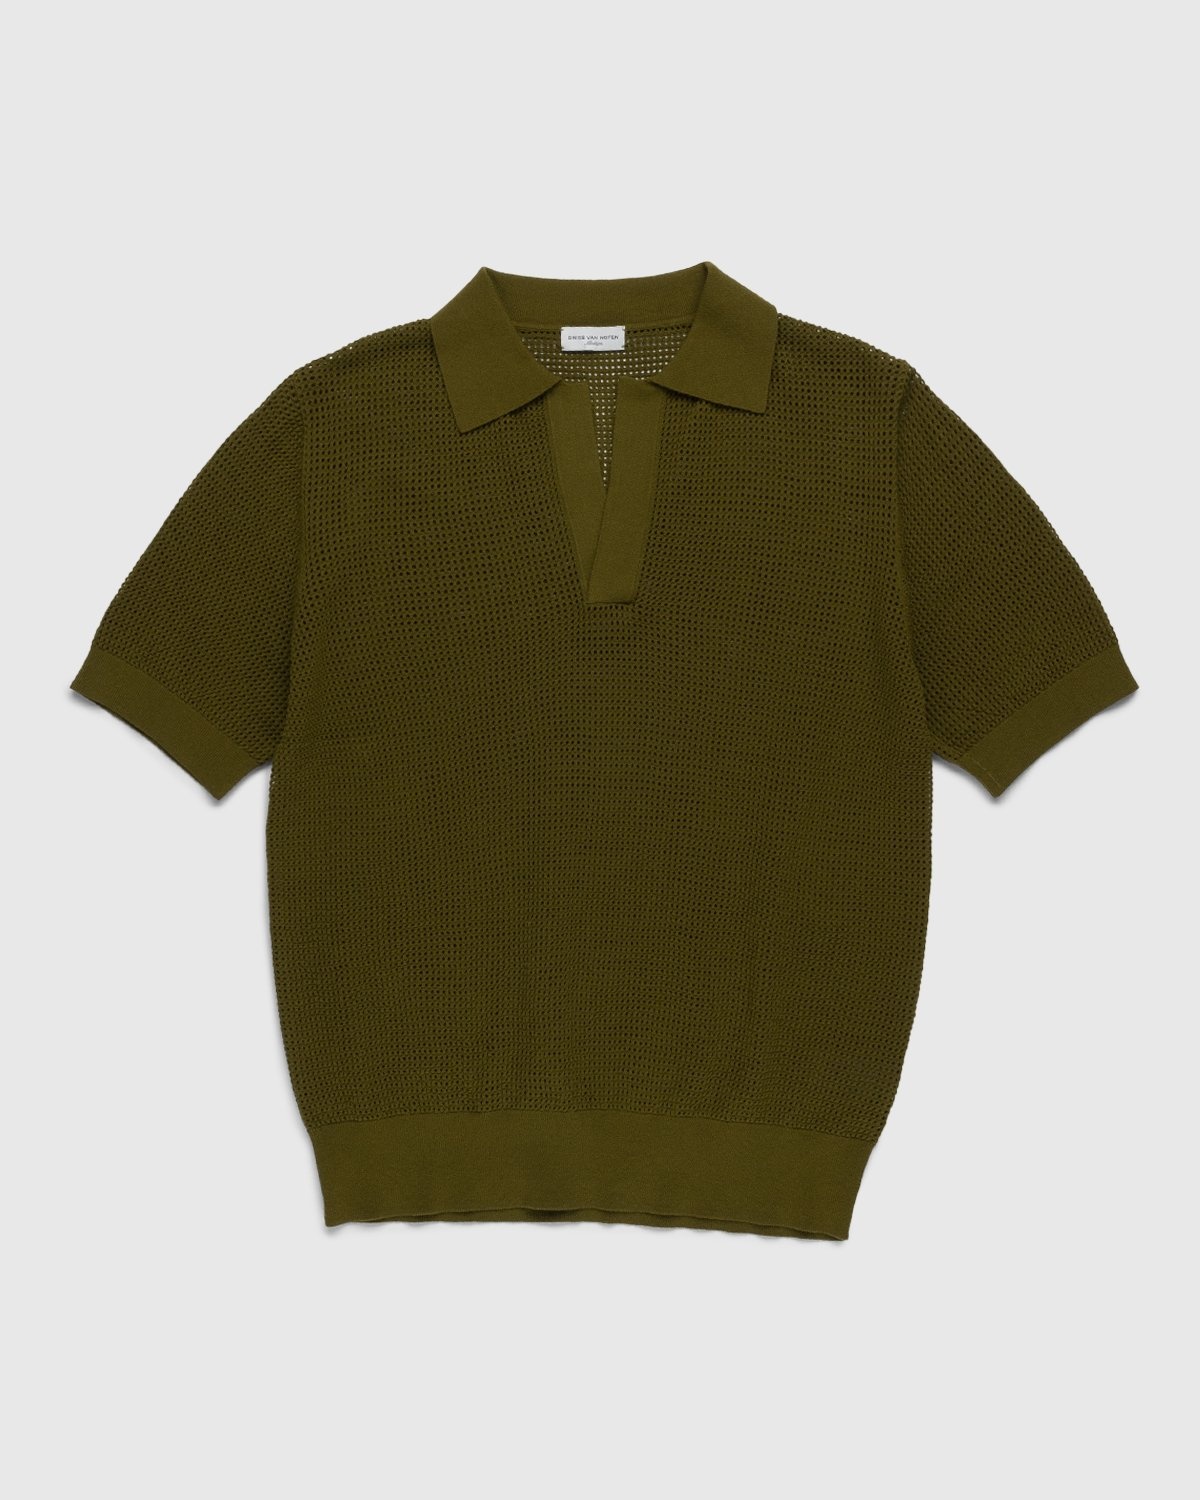 Dries van Noten – Jael Polo Shirt Olive - Polos - Green - Image 1